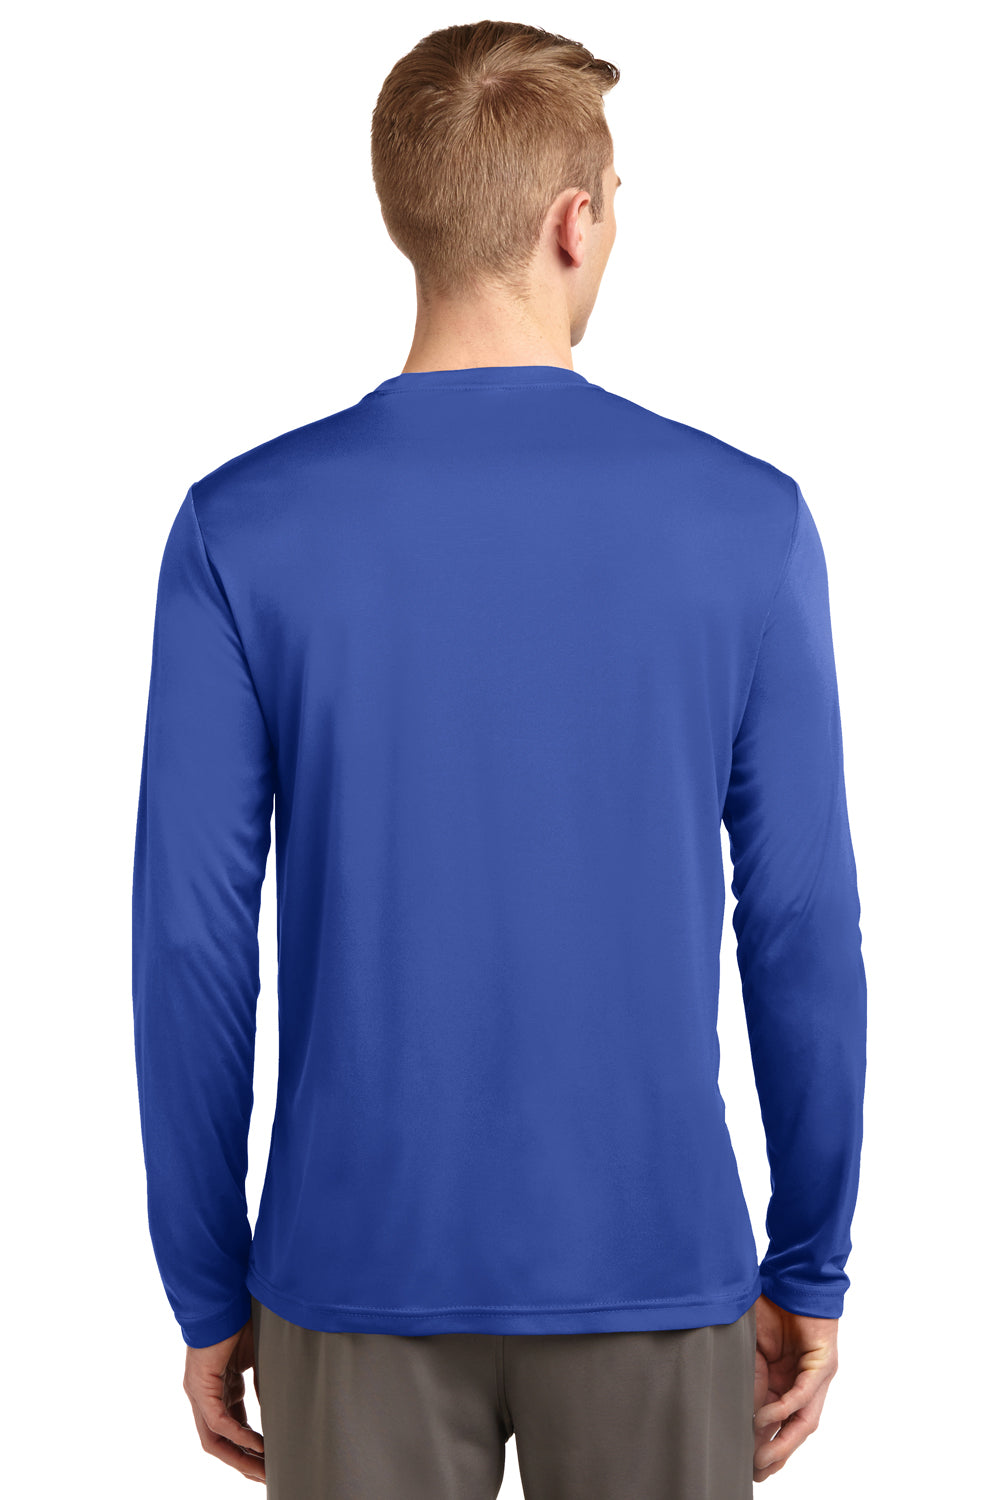 Sport-Tek ST350LS Mens Competitor Moisture Wicking Long Sleeve Crewneck T-Shirt Royal Blue Back